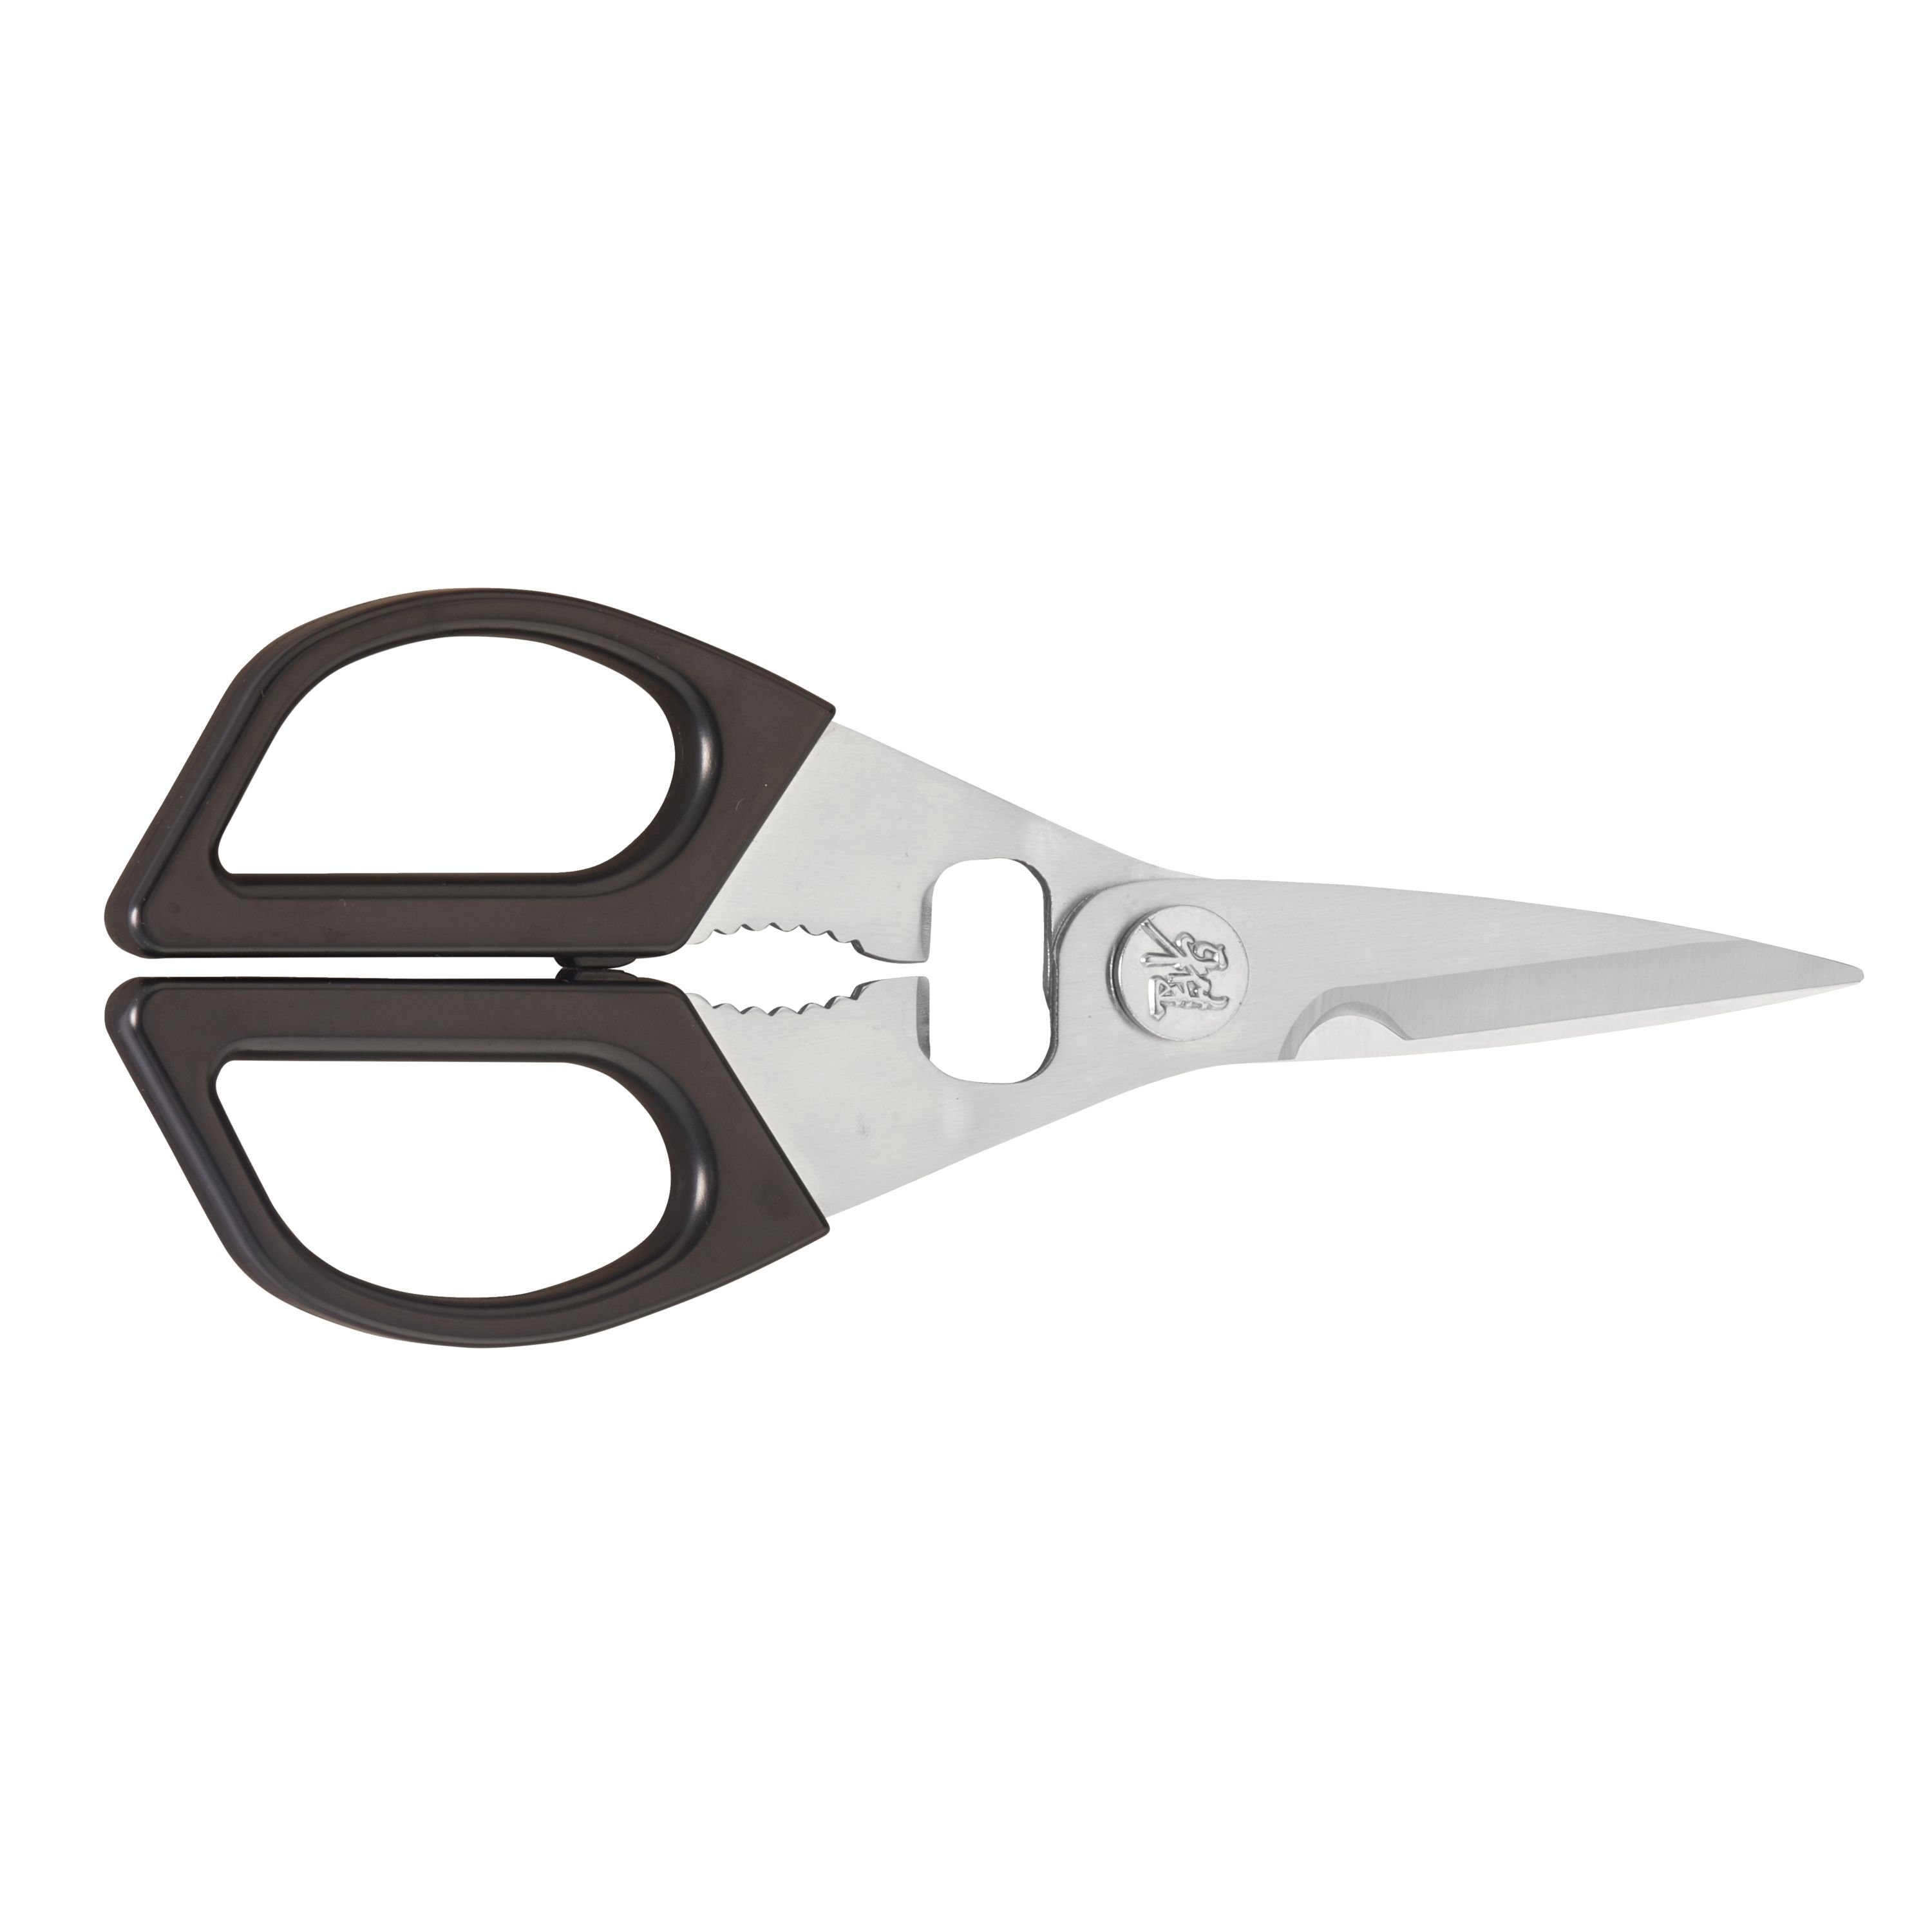 Henckels Multipurpose Detachable Kitchen Shears / Scissors